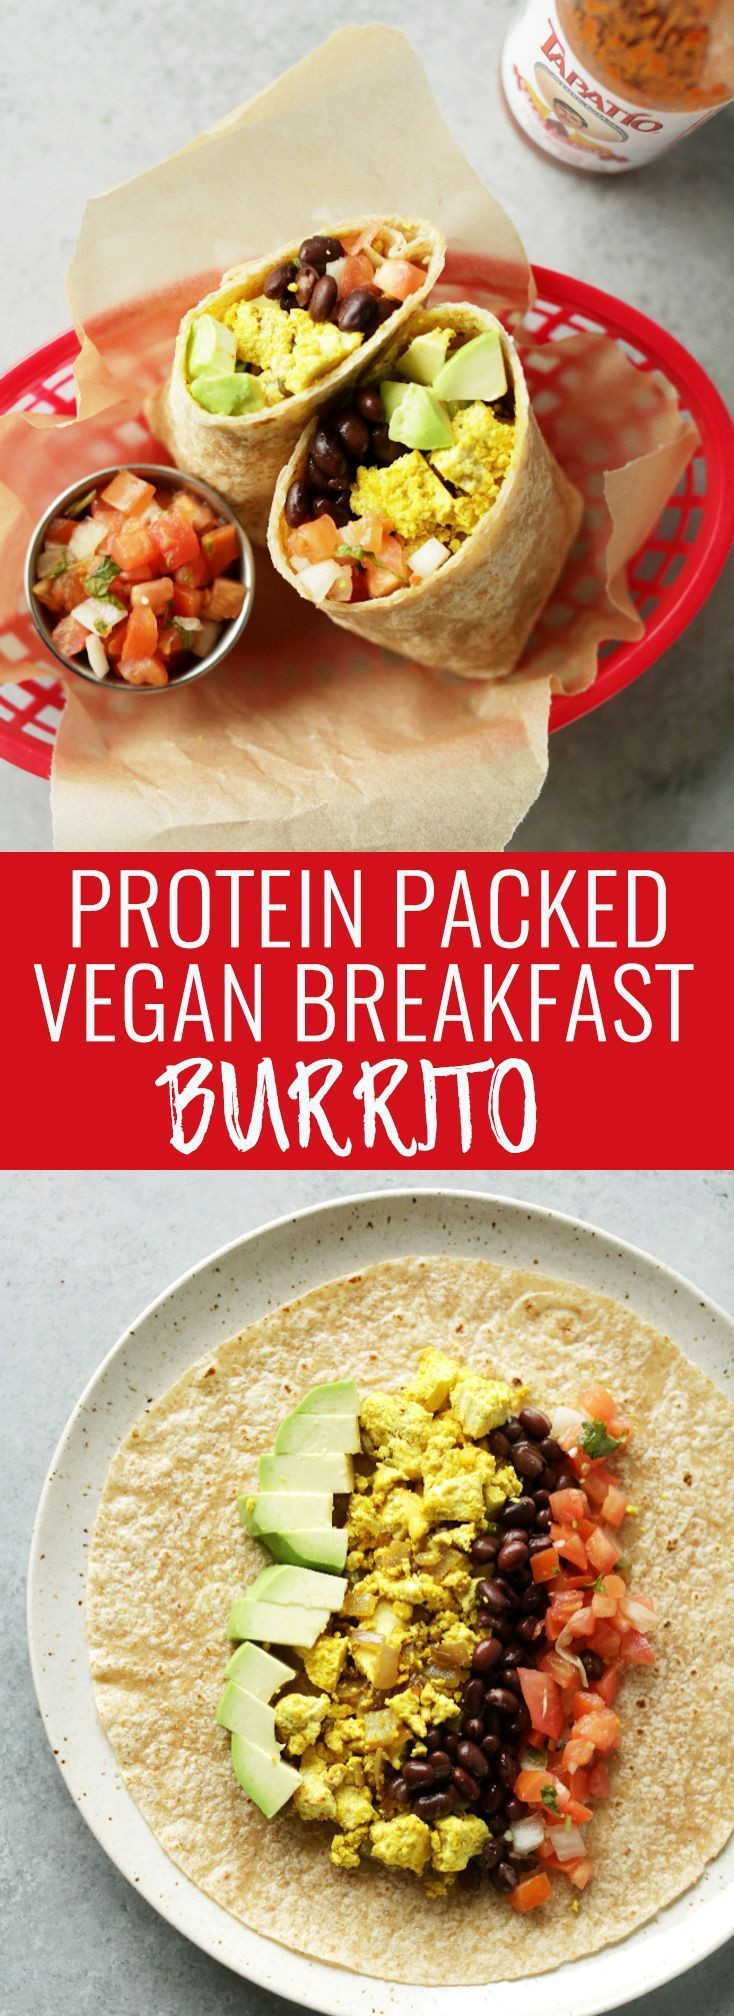 Vegetarian Protein Breakfast
 Protein packed vegan breakfast burrito Recipe